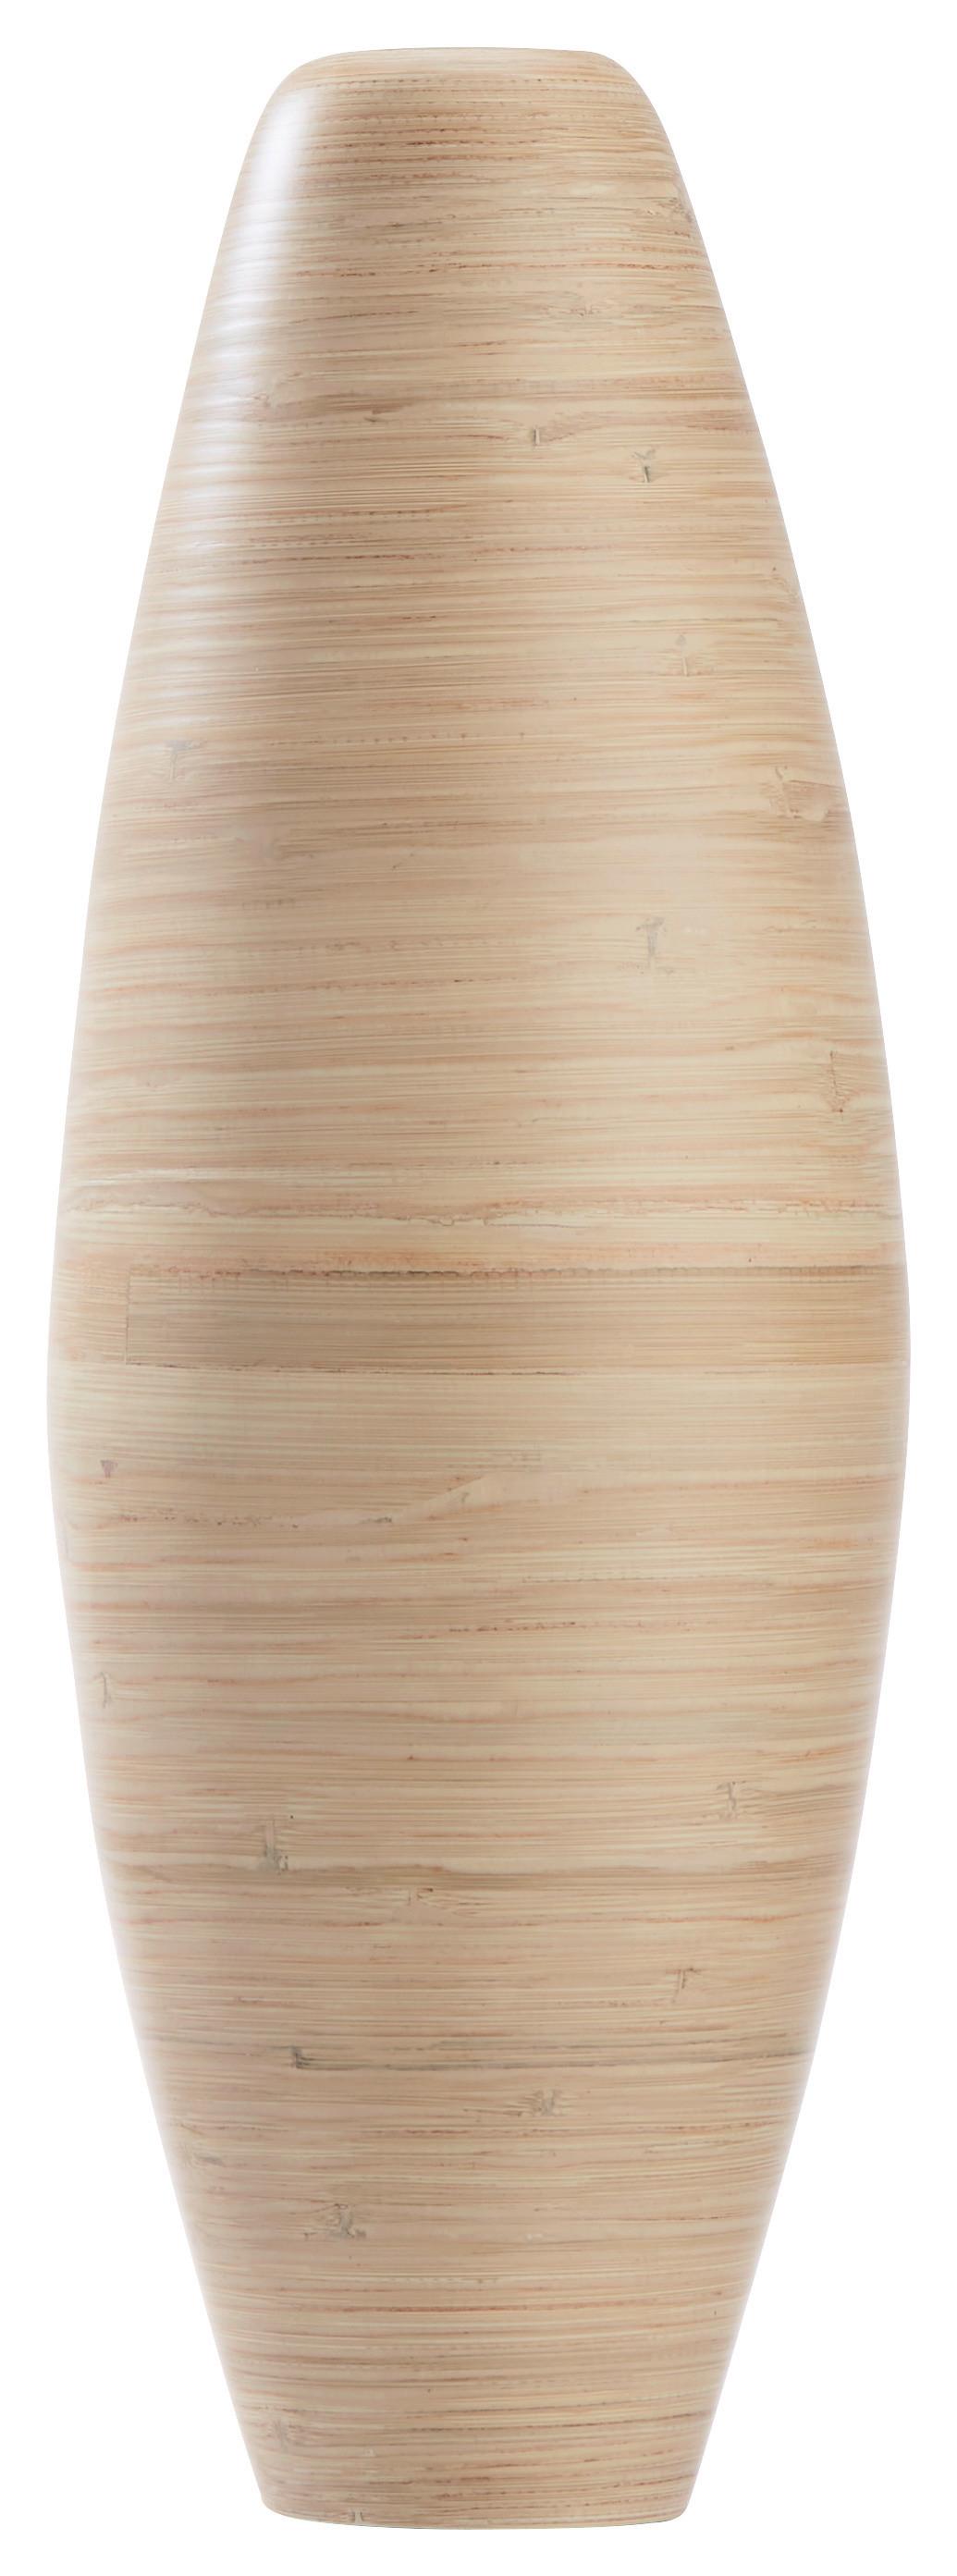 Vase Diana aus Bambus - Naturfarben, LIFESTYLE, Naturmaterialien (22/65cm) - Zandiara